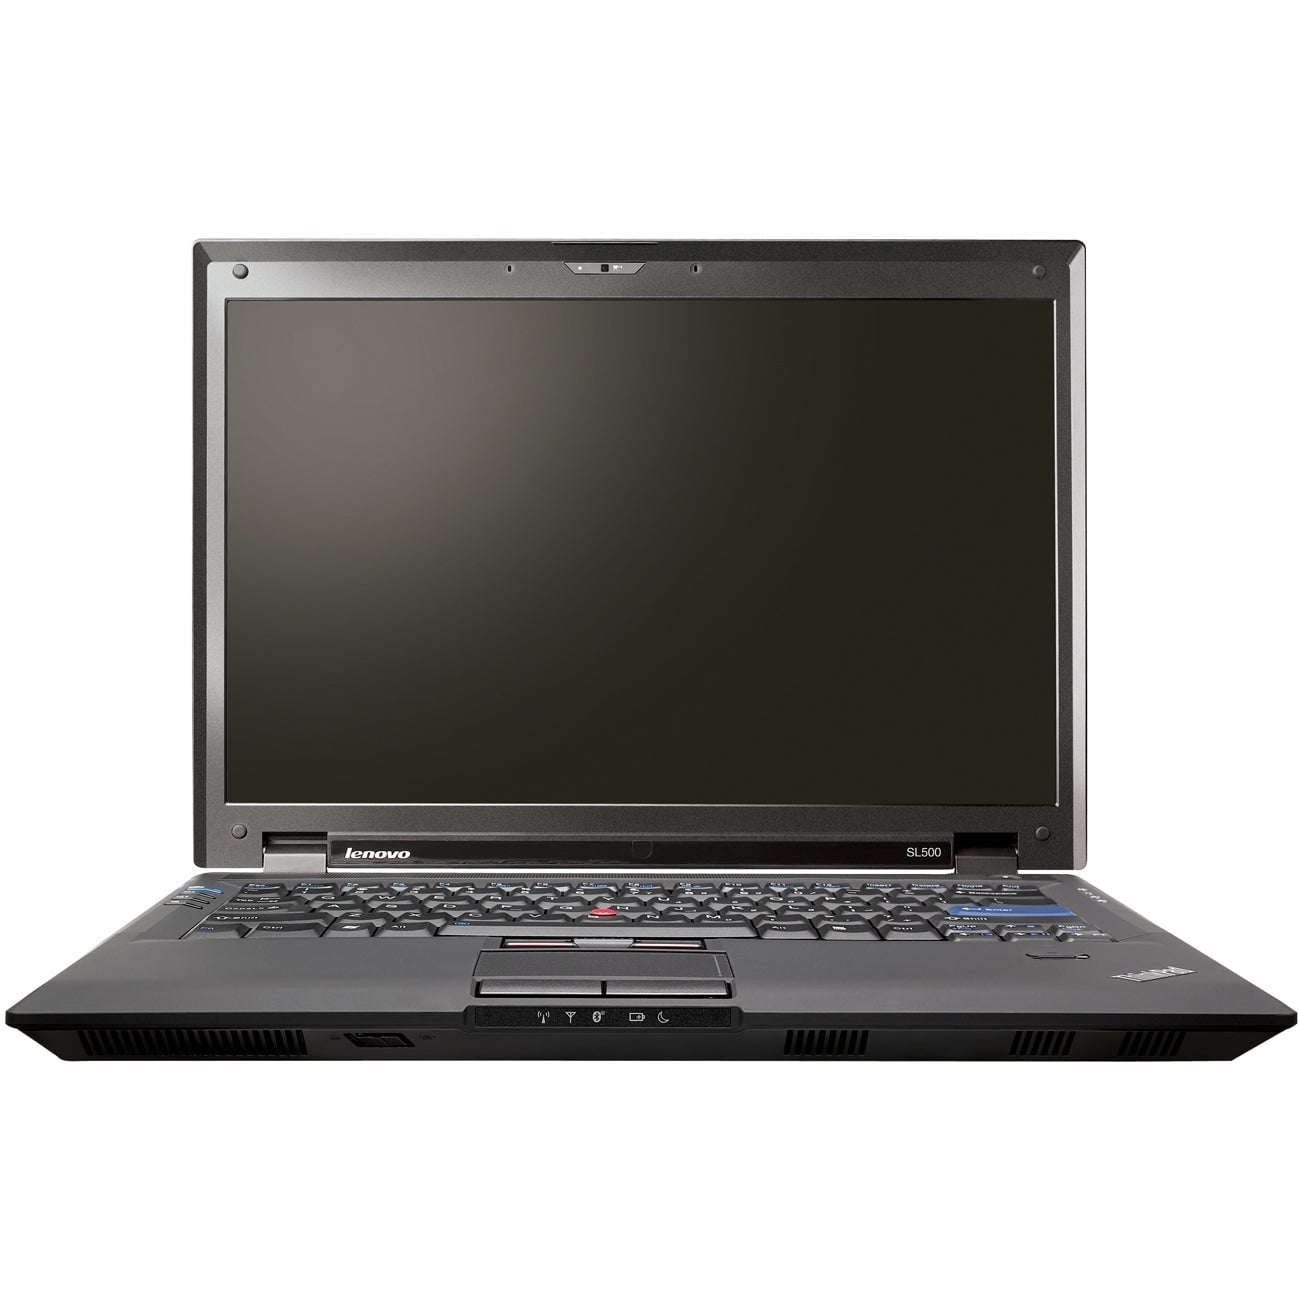 LENOVO Thinkpad SL500 Laptop Computer, 2.40 GHz Intel Core 2 Duo, 2GB DDR2 RAM, 250GB SATA Hard Drive, Windows 10 Home 64 Bit, 15" Screen (Used) Walmart.com